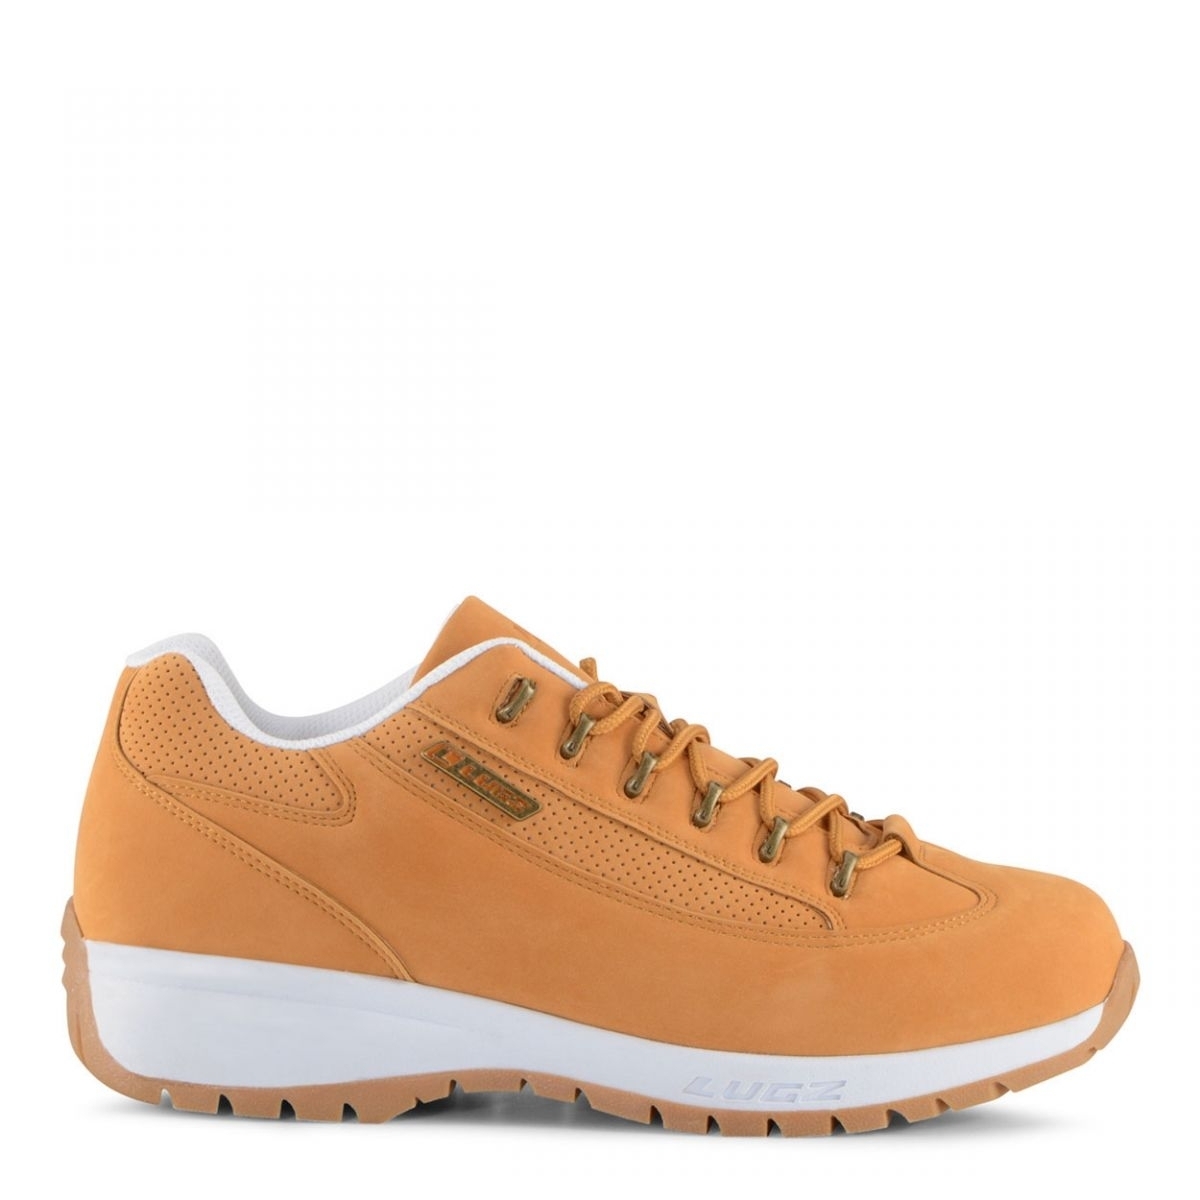 Lugz Men's Express Sneakers Golden Wheat/White - MEXPRSPK-714 Golden Wheat/White/Gum - Golden Wheat/White/Gum, 10.5